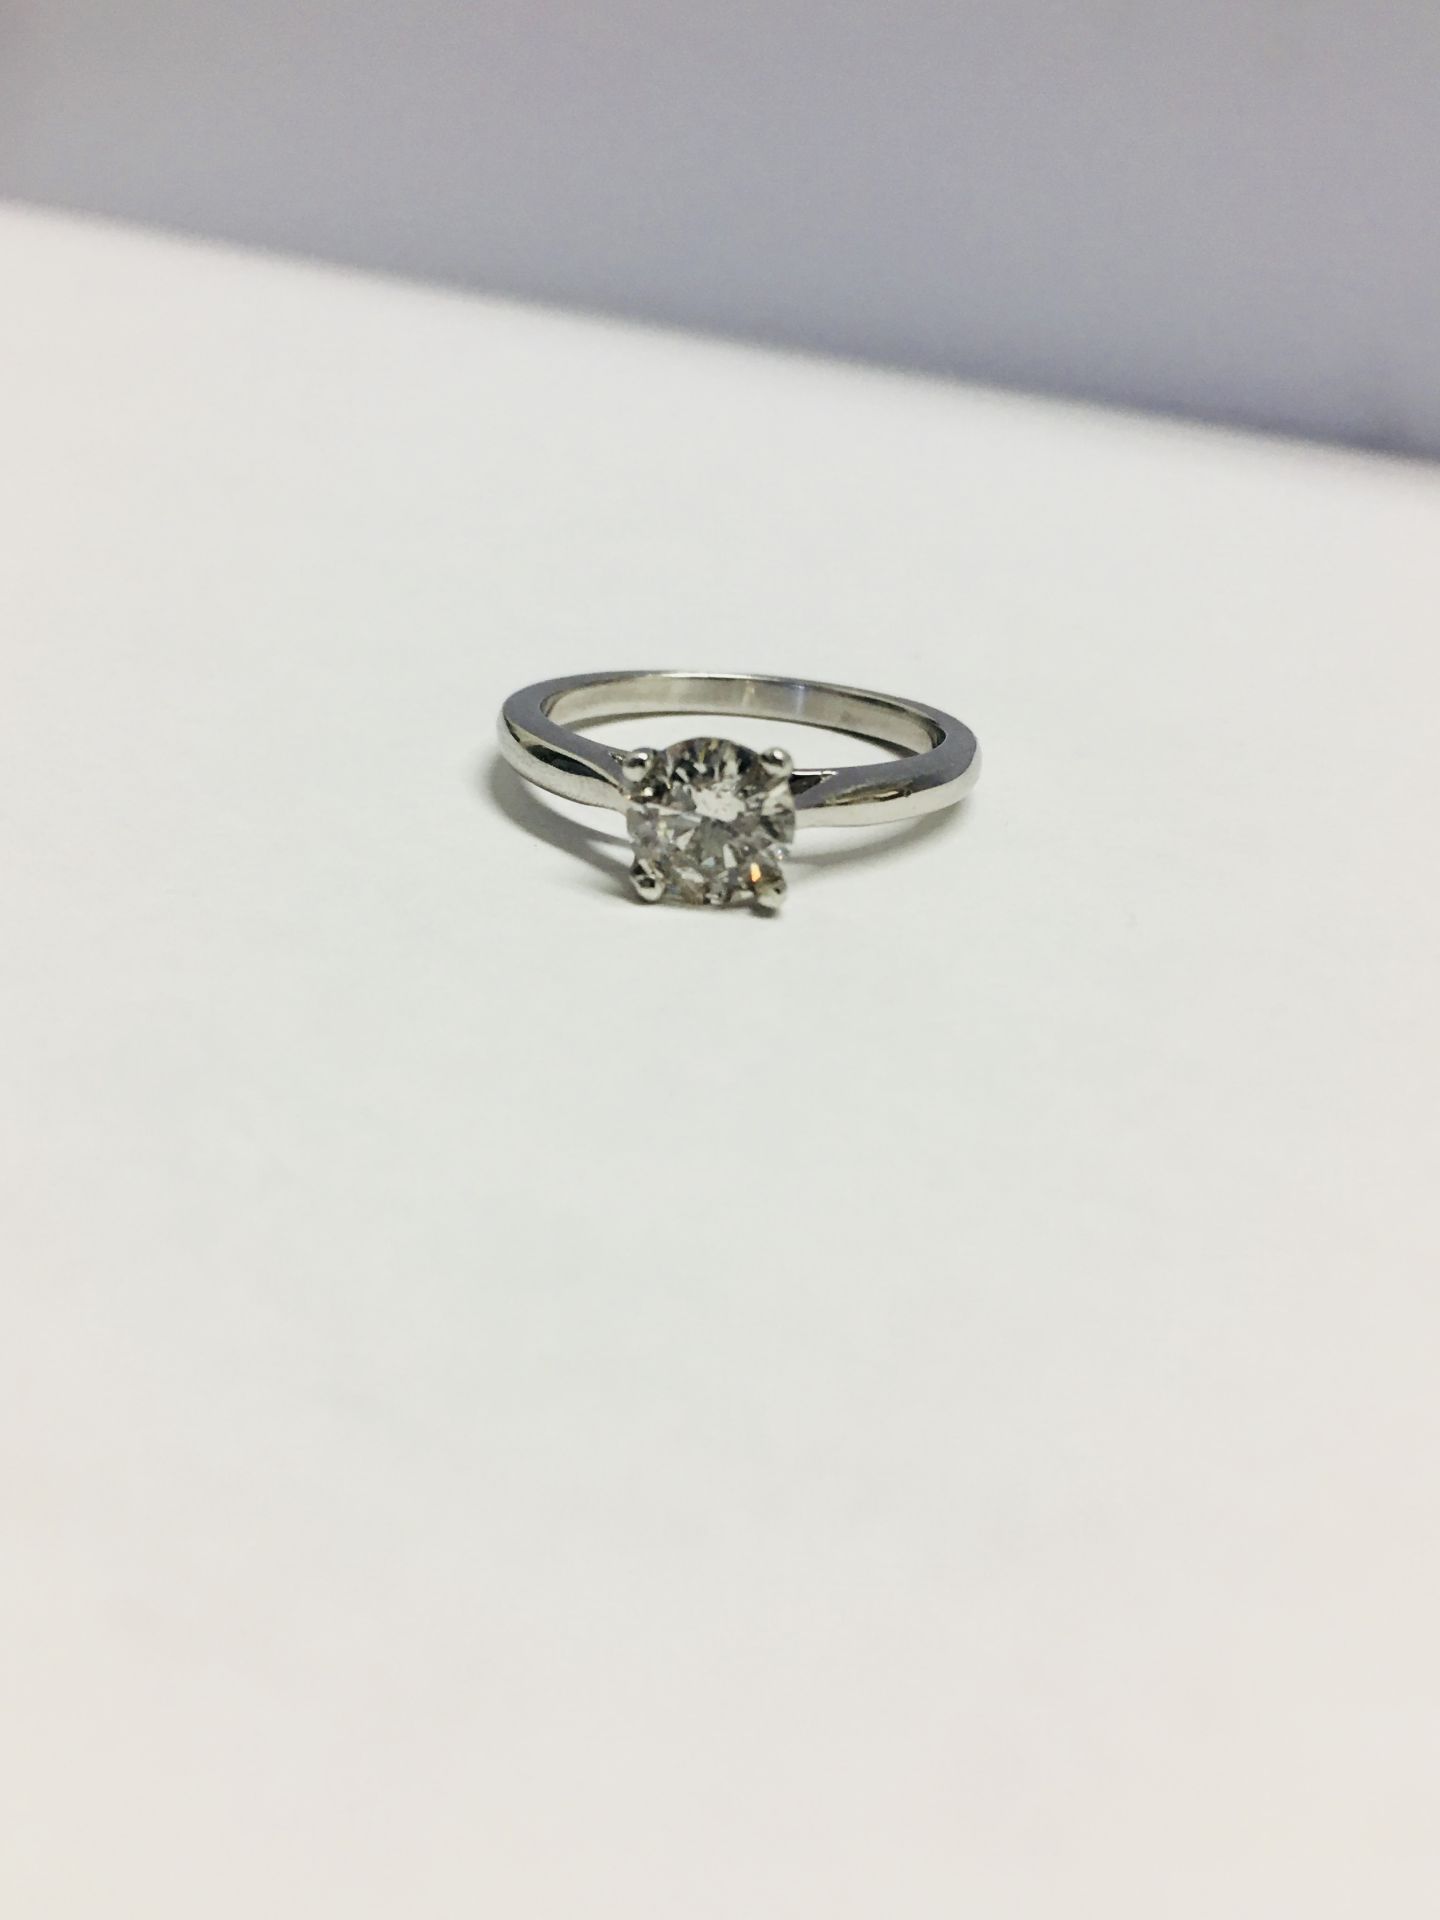 0.96ct brilliant cut diamond,I colour i1 clarity,platinum 4 claws setting,3.2gms,uk London